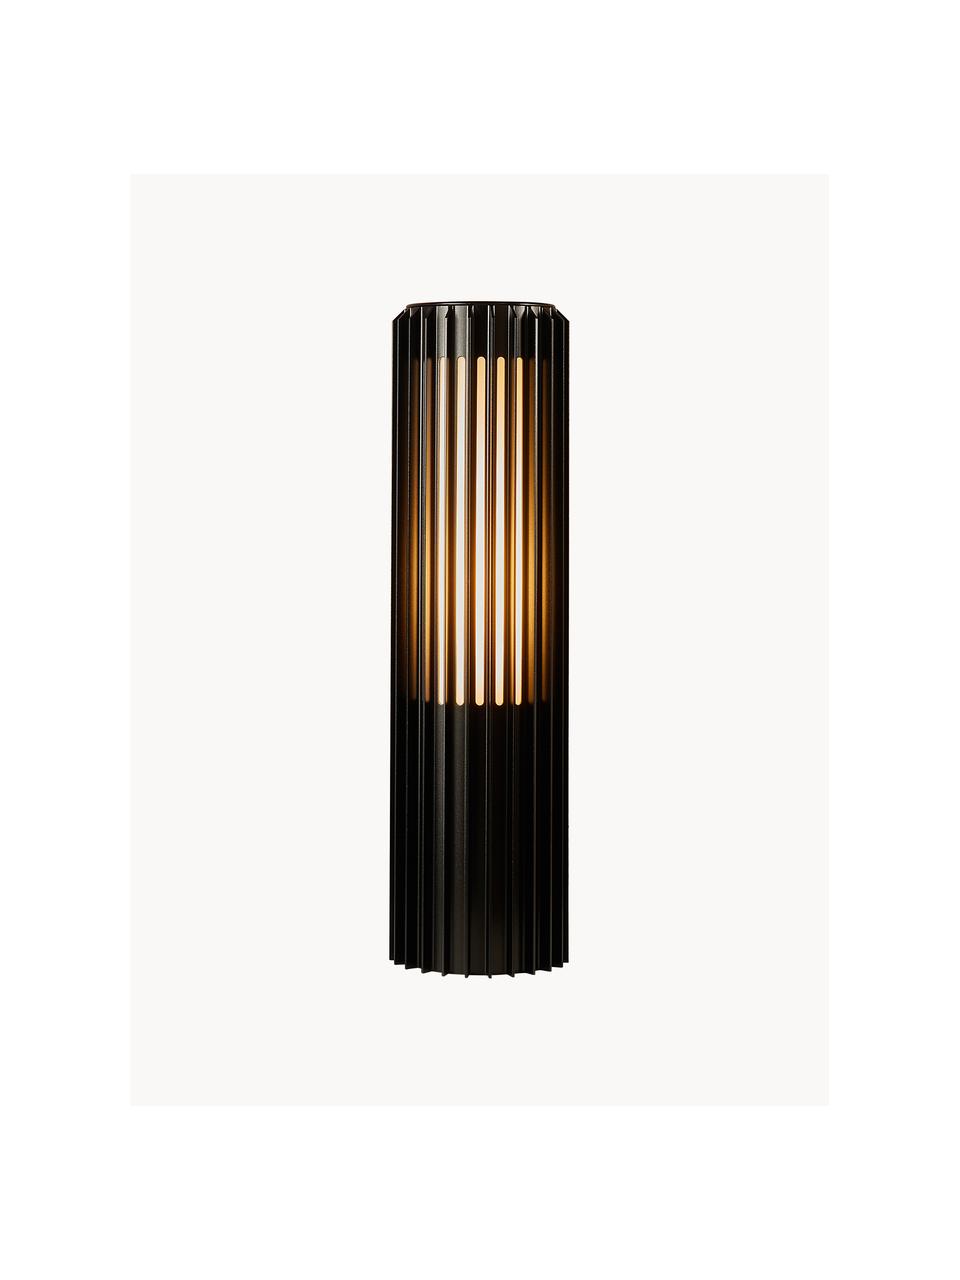 Borne lumineuse Aludra, Noir, Ø 12 x haut. 45 cm